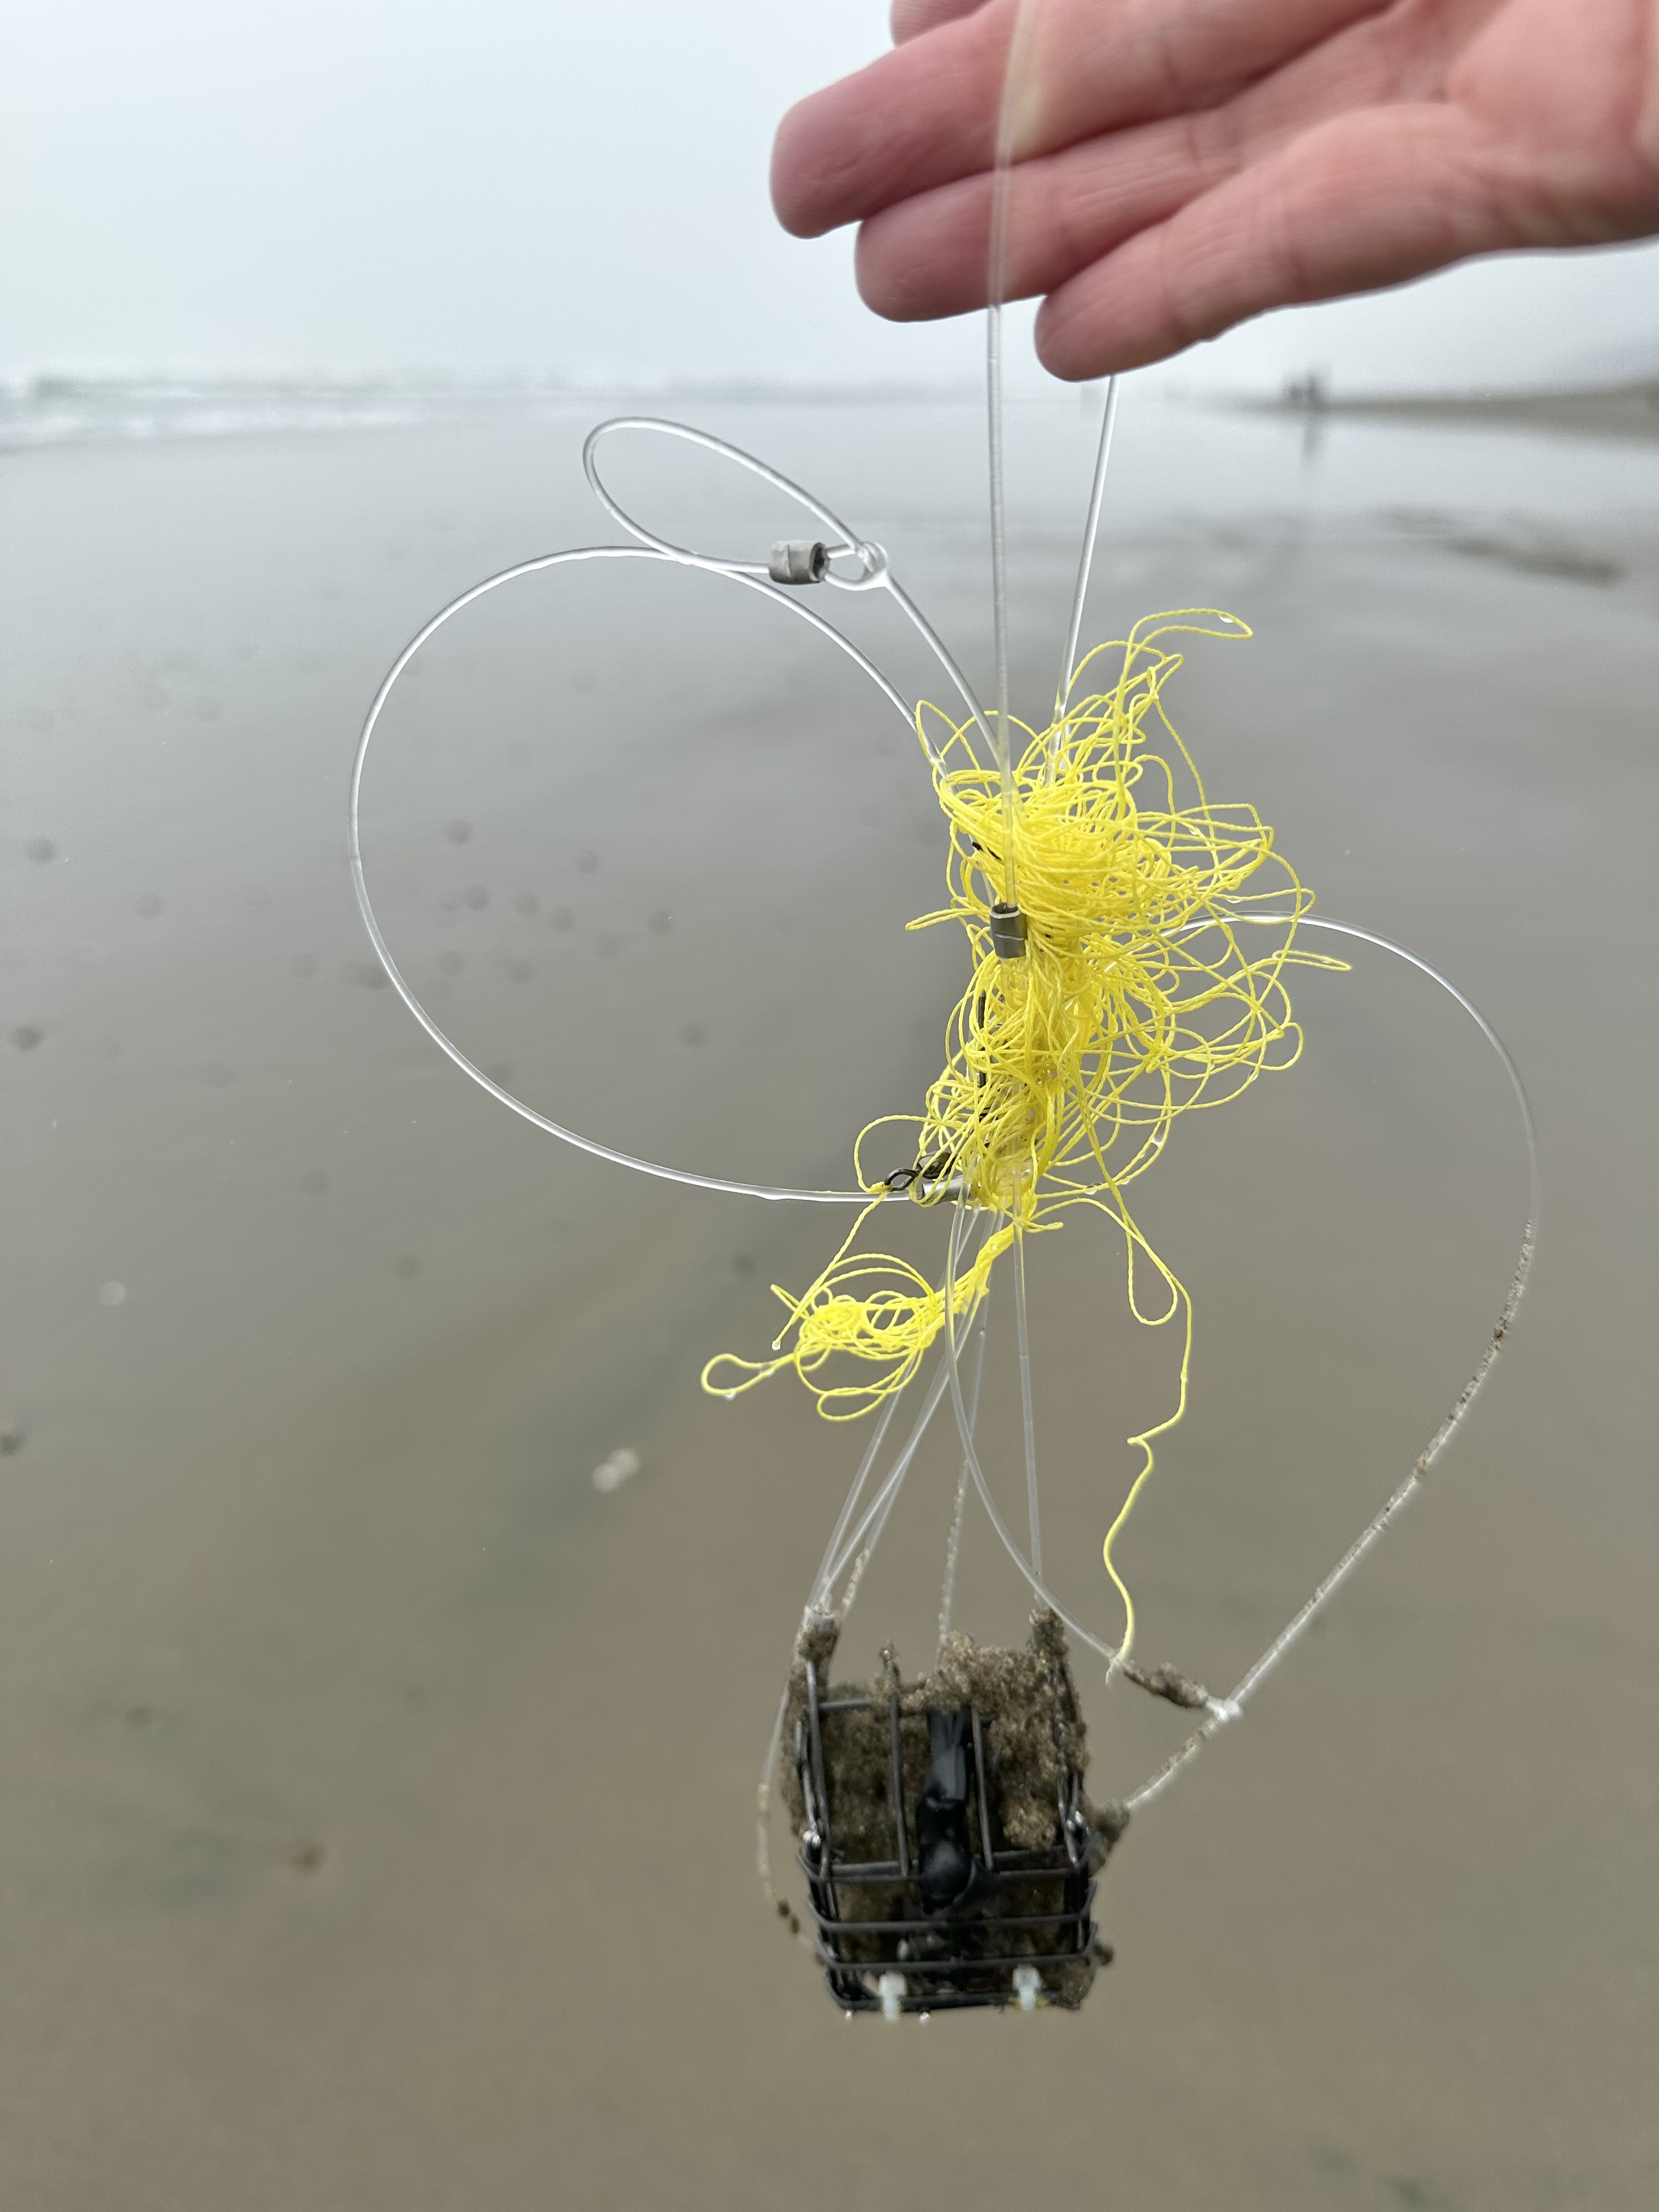 Fishing Tackle Trash on Ocean Beach San Francisco